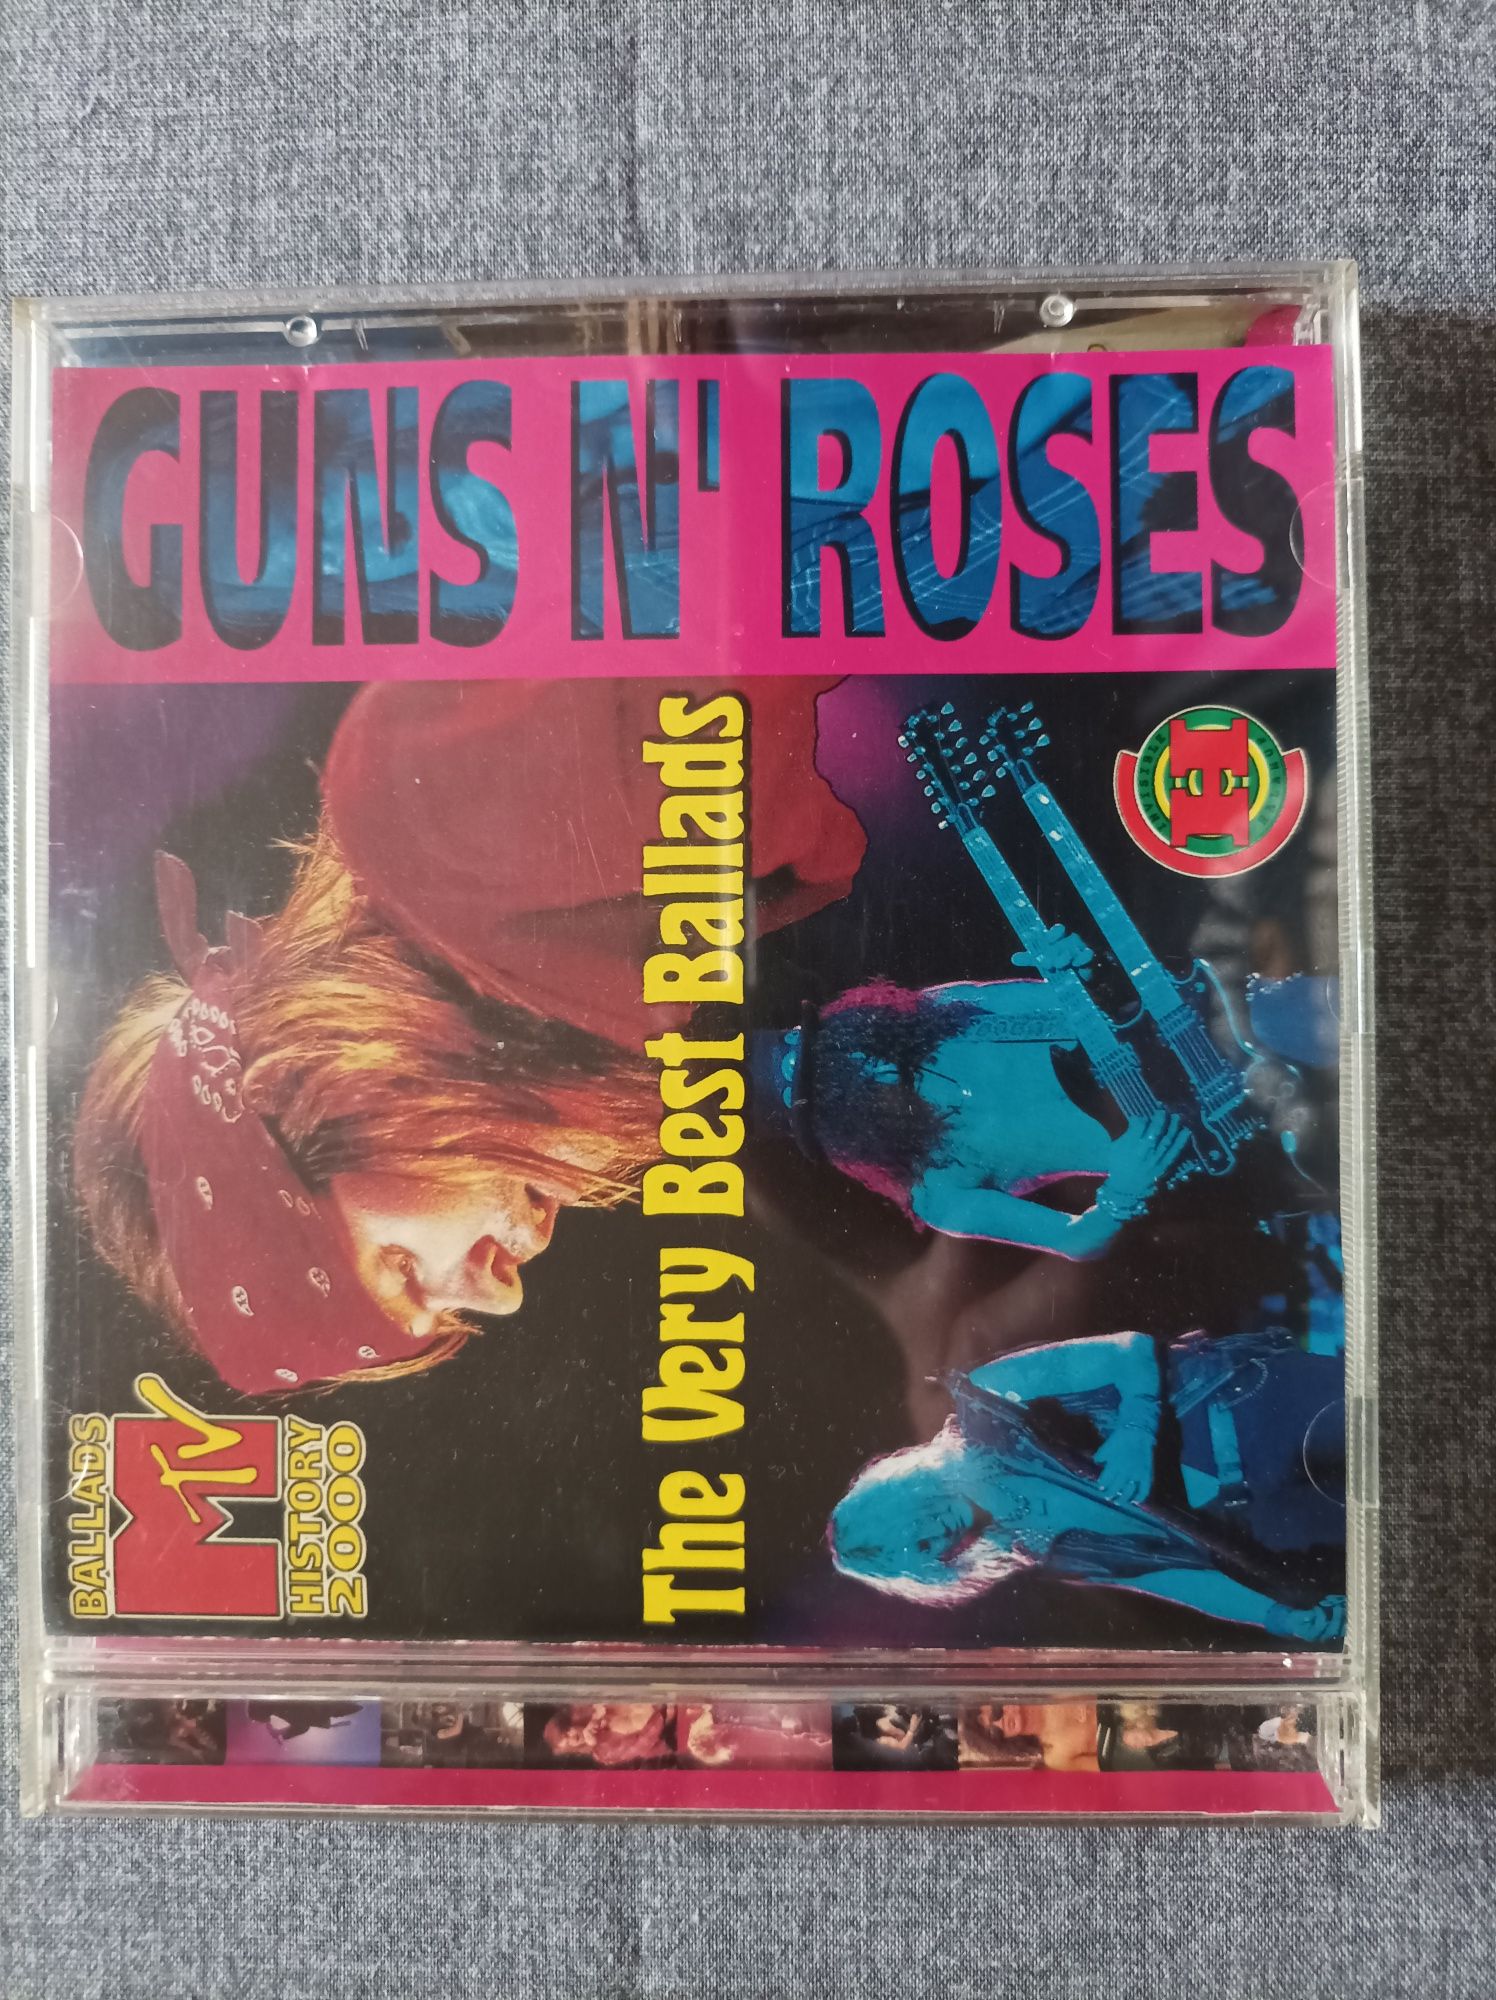 23 - Guns n' Roses - The Very Best Ballads - 1 x CD - MTV HISTORY 2000